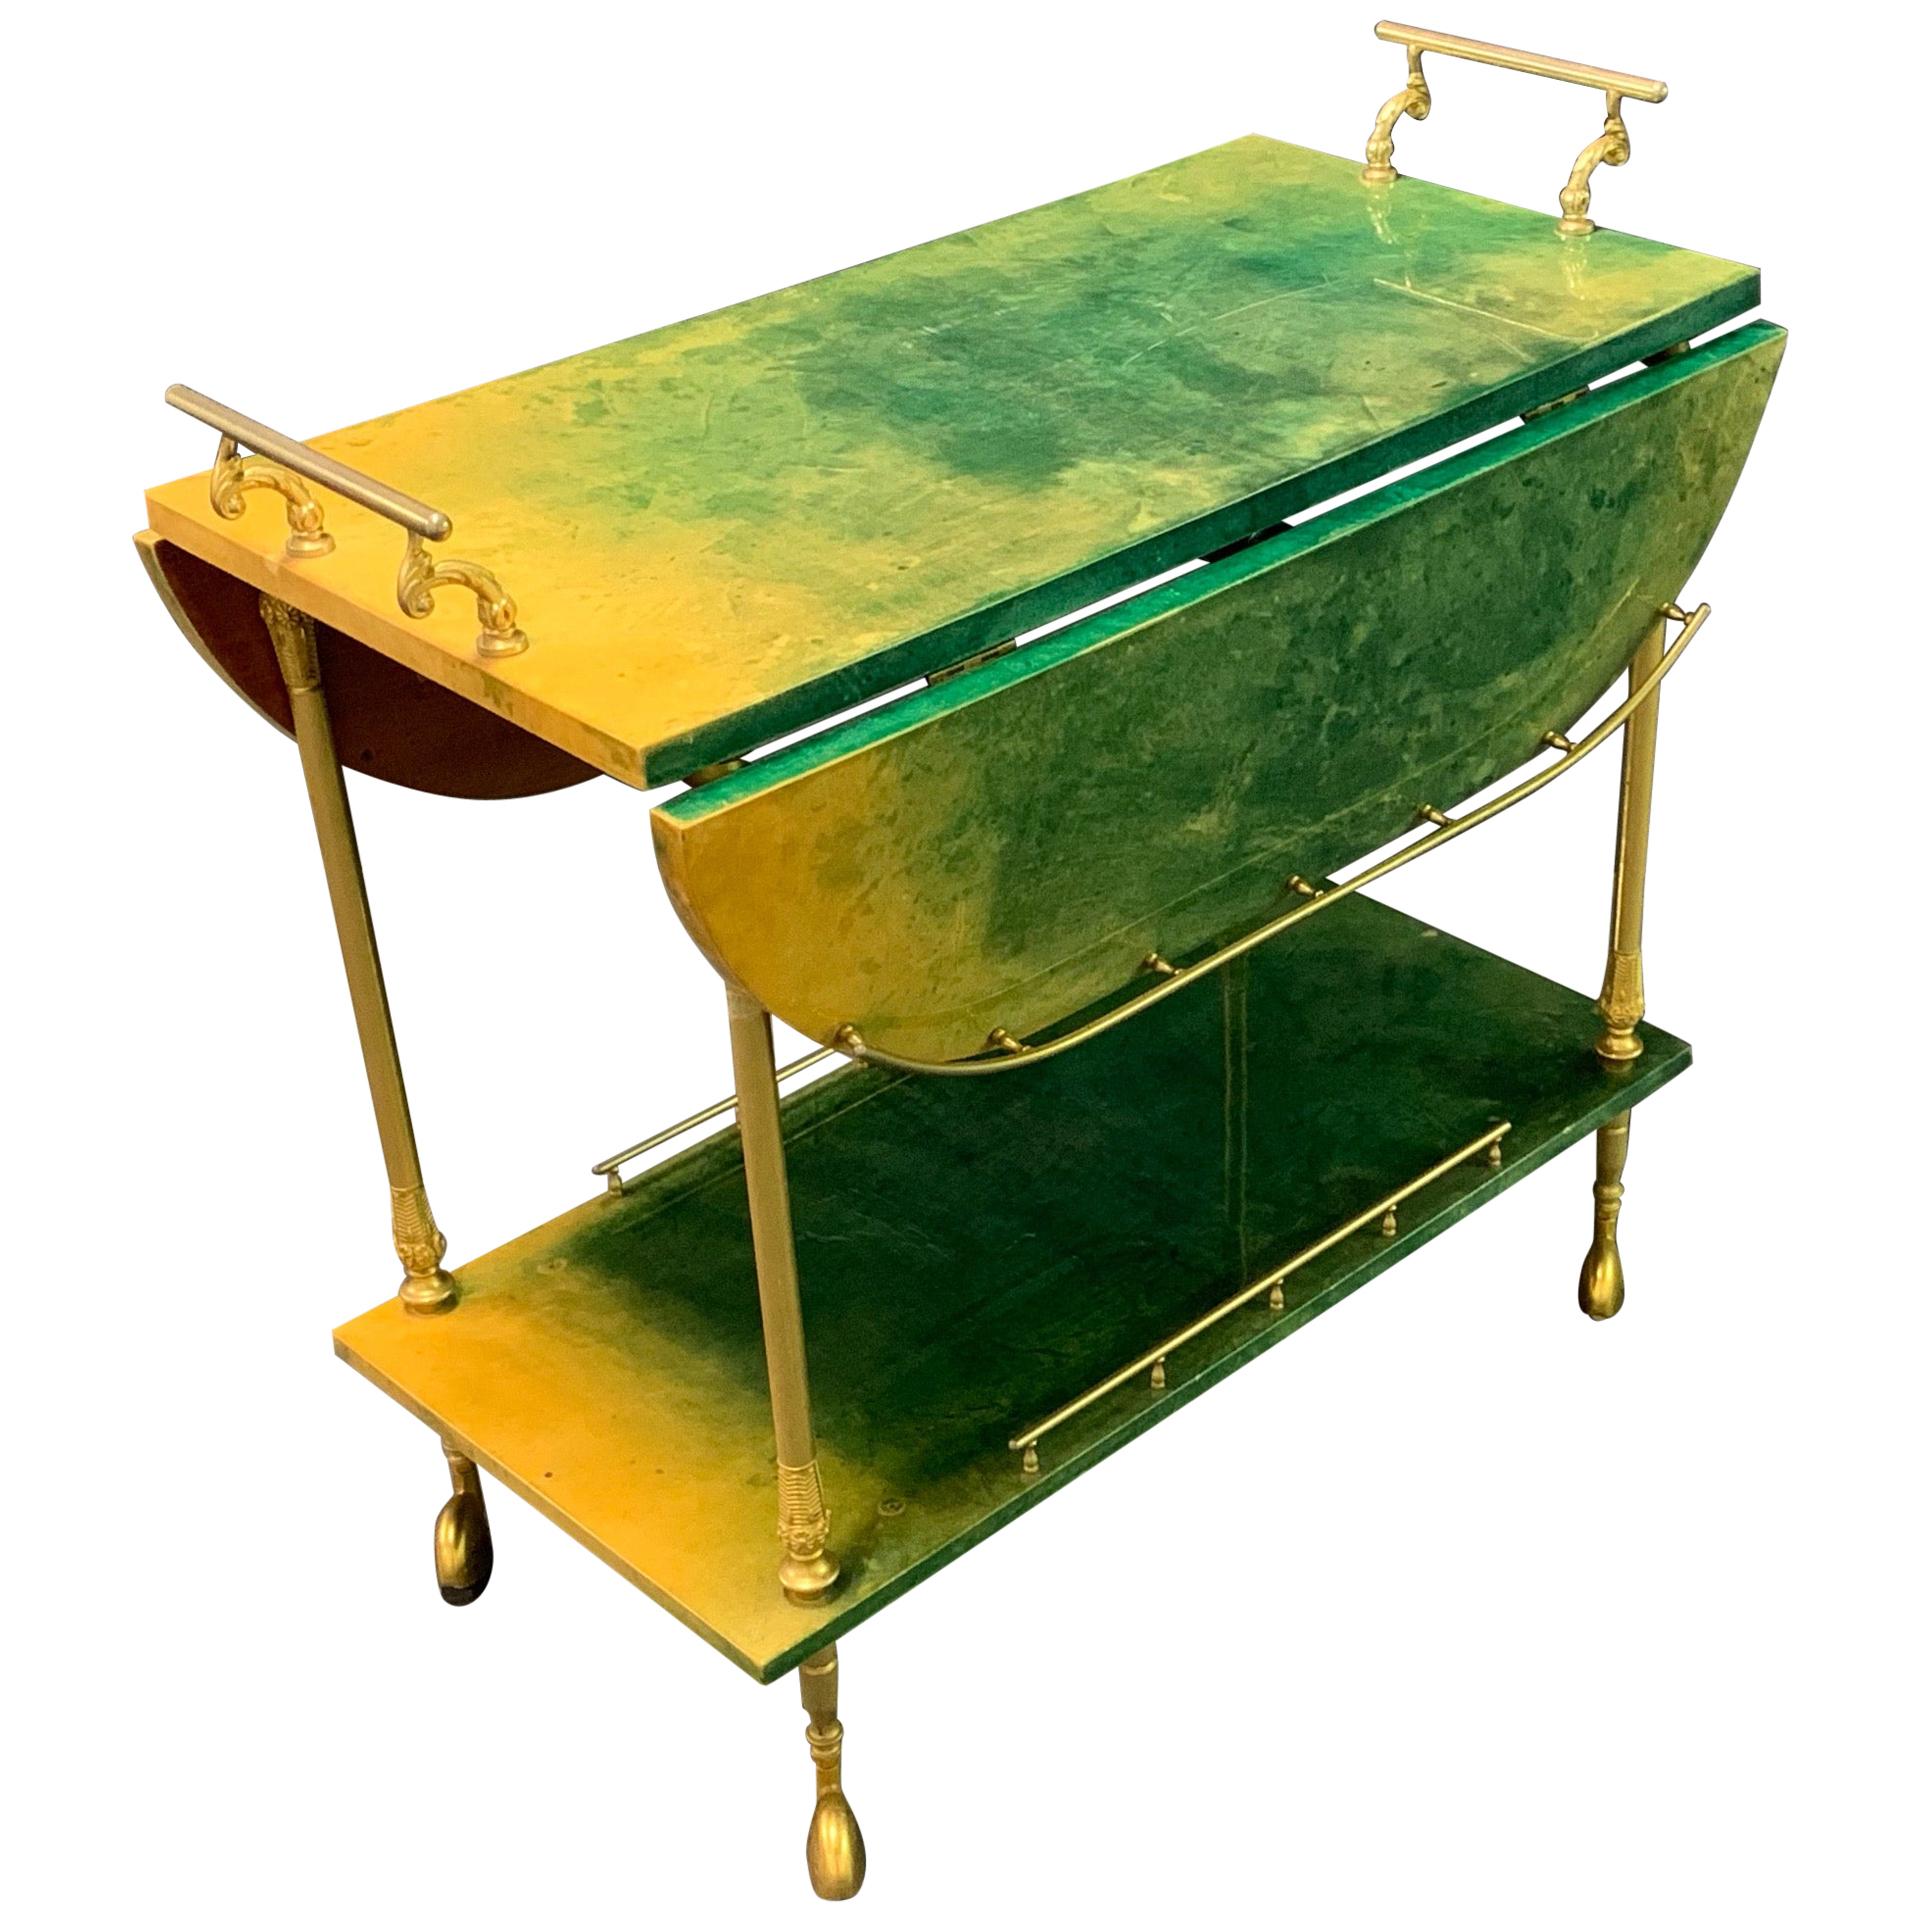 Amazing Aldo Tura Cart with Unique Color